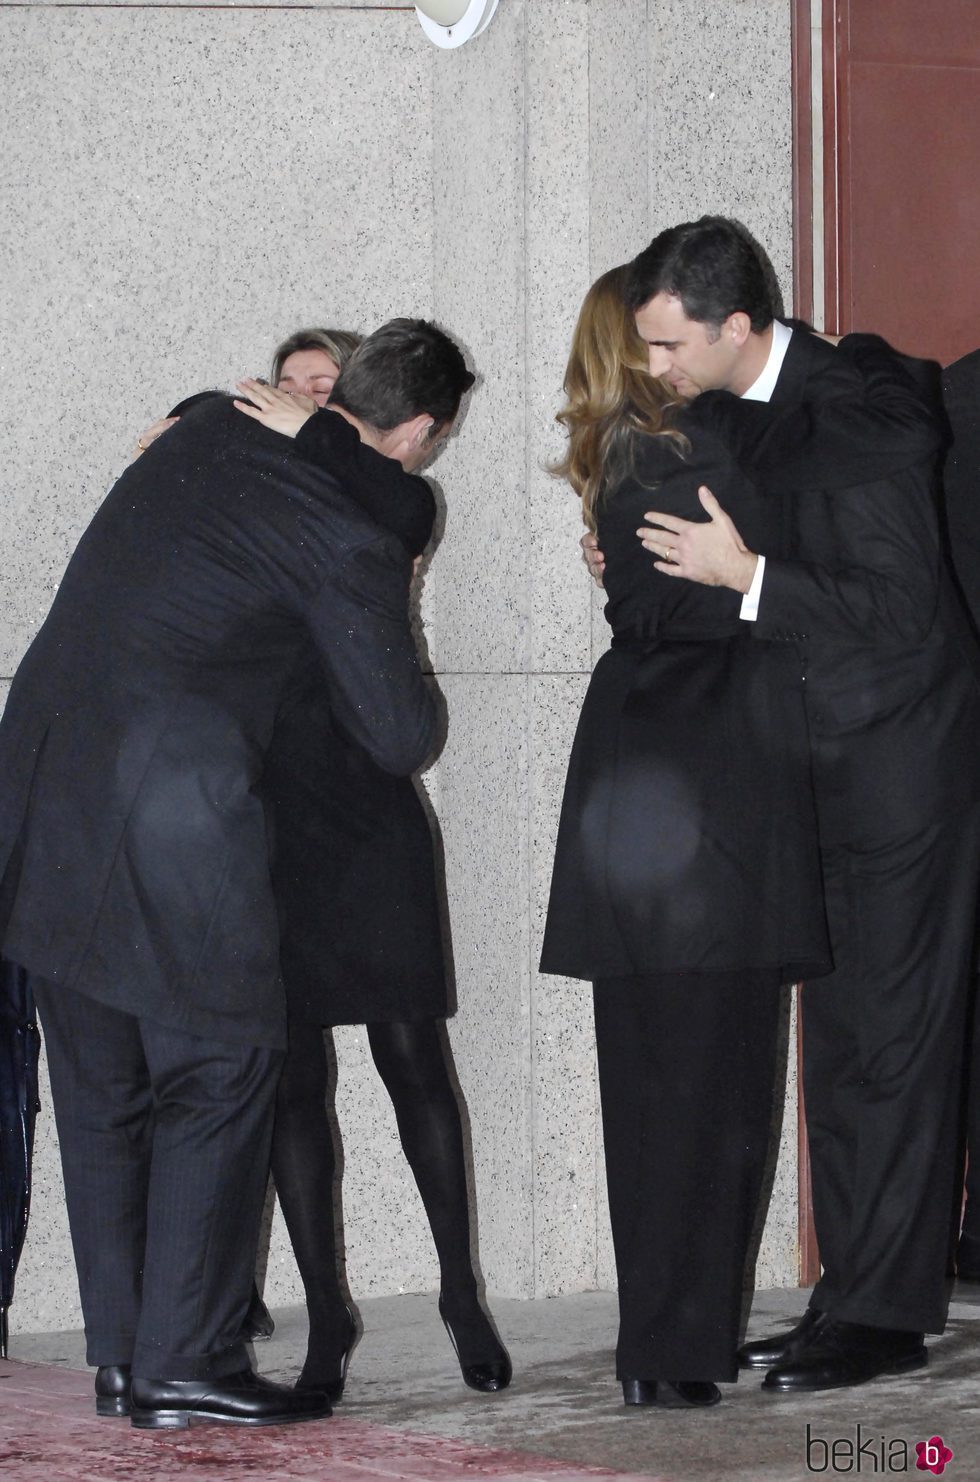 La Infanta Cristina e Iñaki Urdangarín abrazan a los Reyes Felipe y Letizia en el funeral de Erika Ortiz